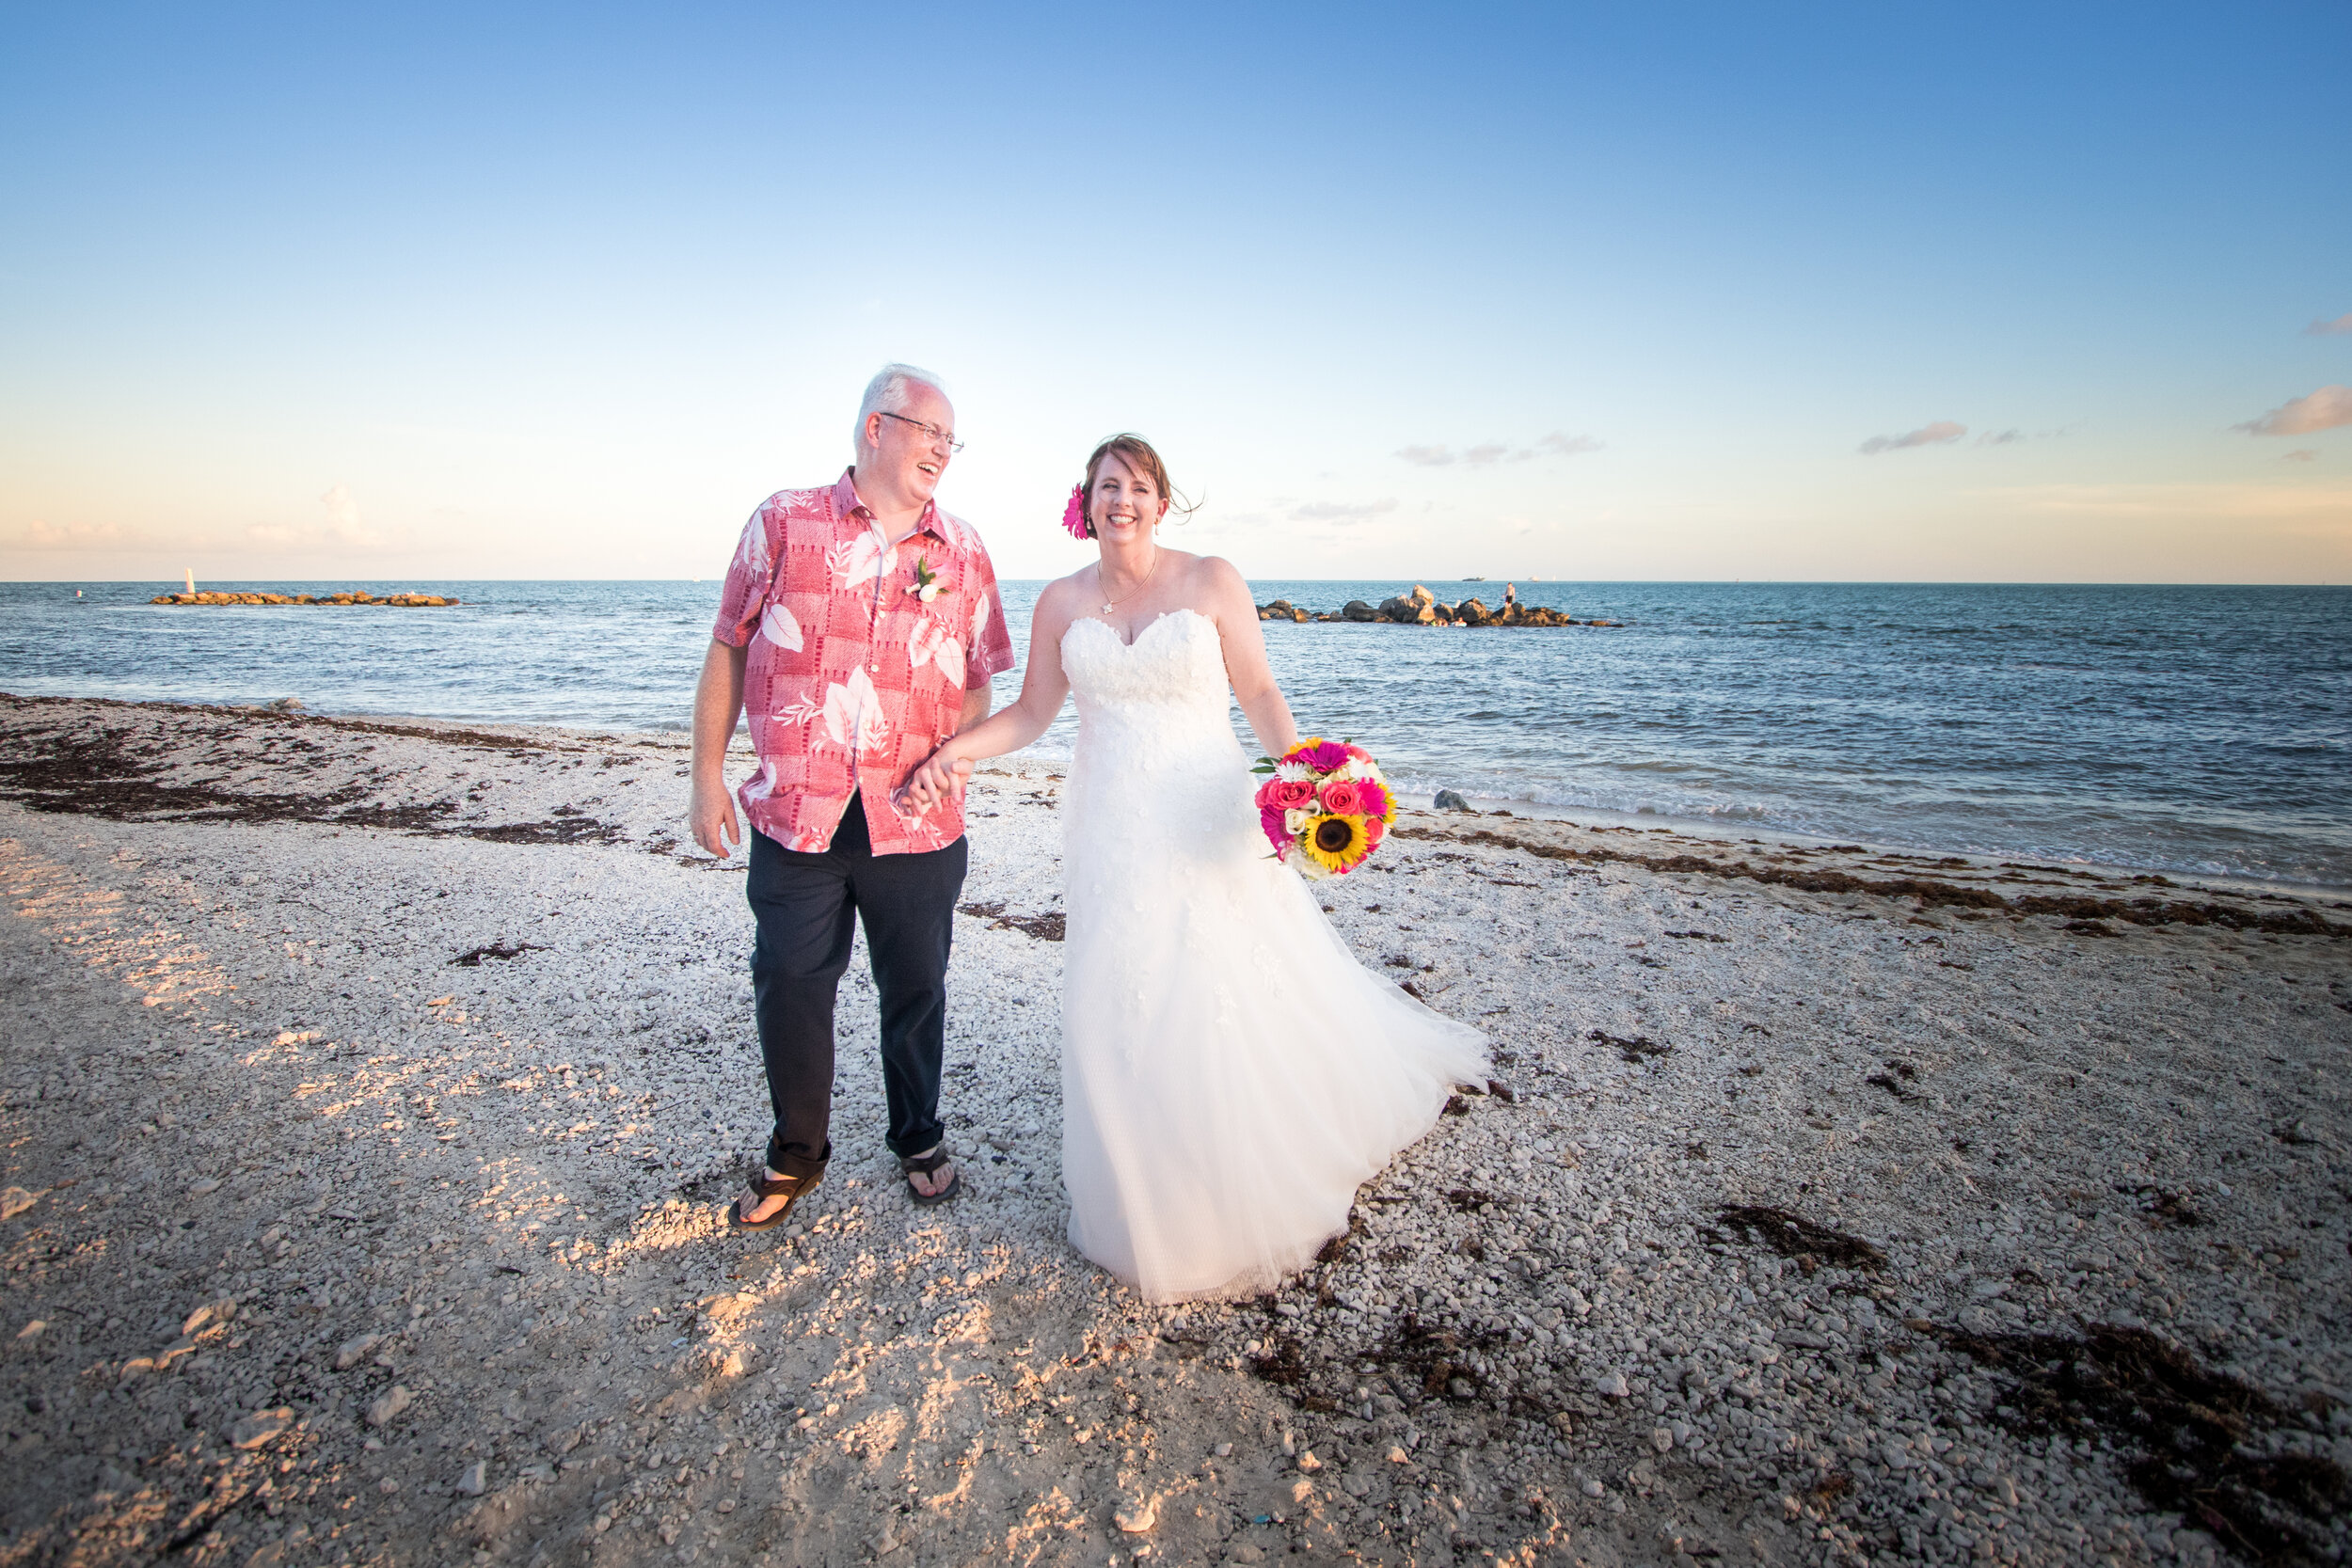 Retouching Key West beach wedding photo - before